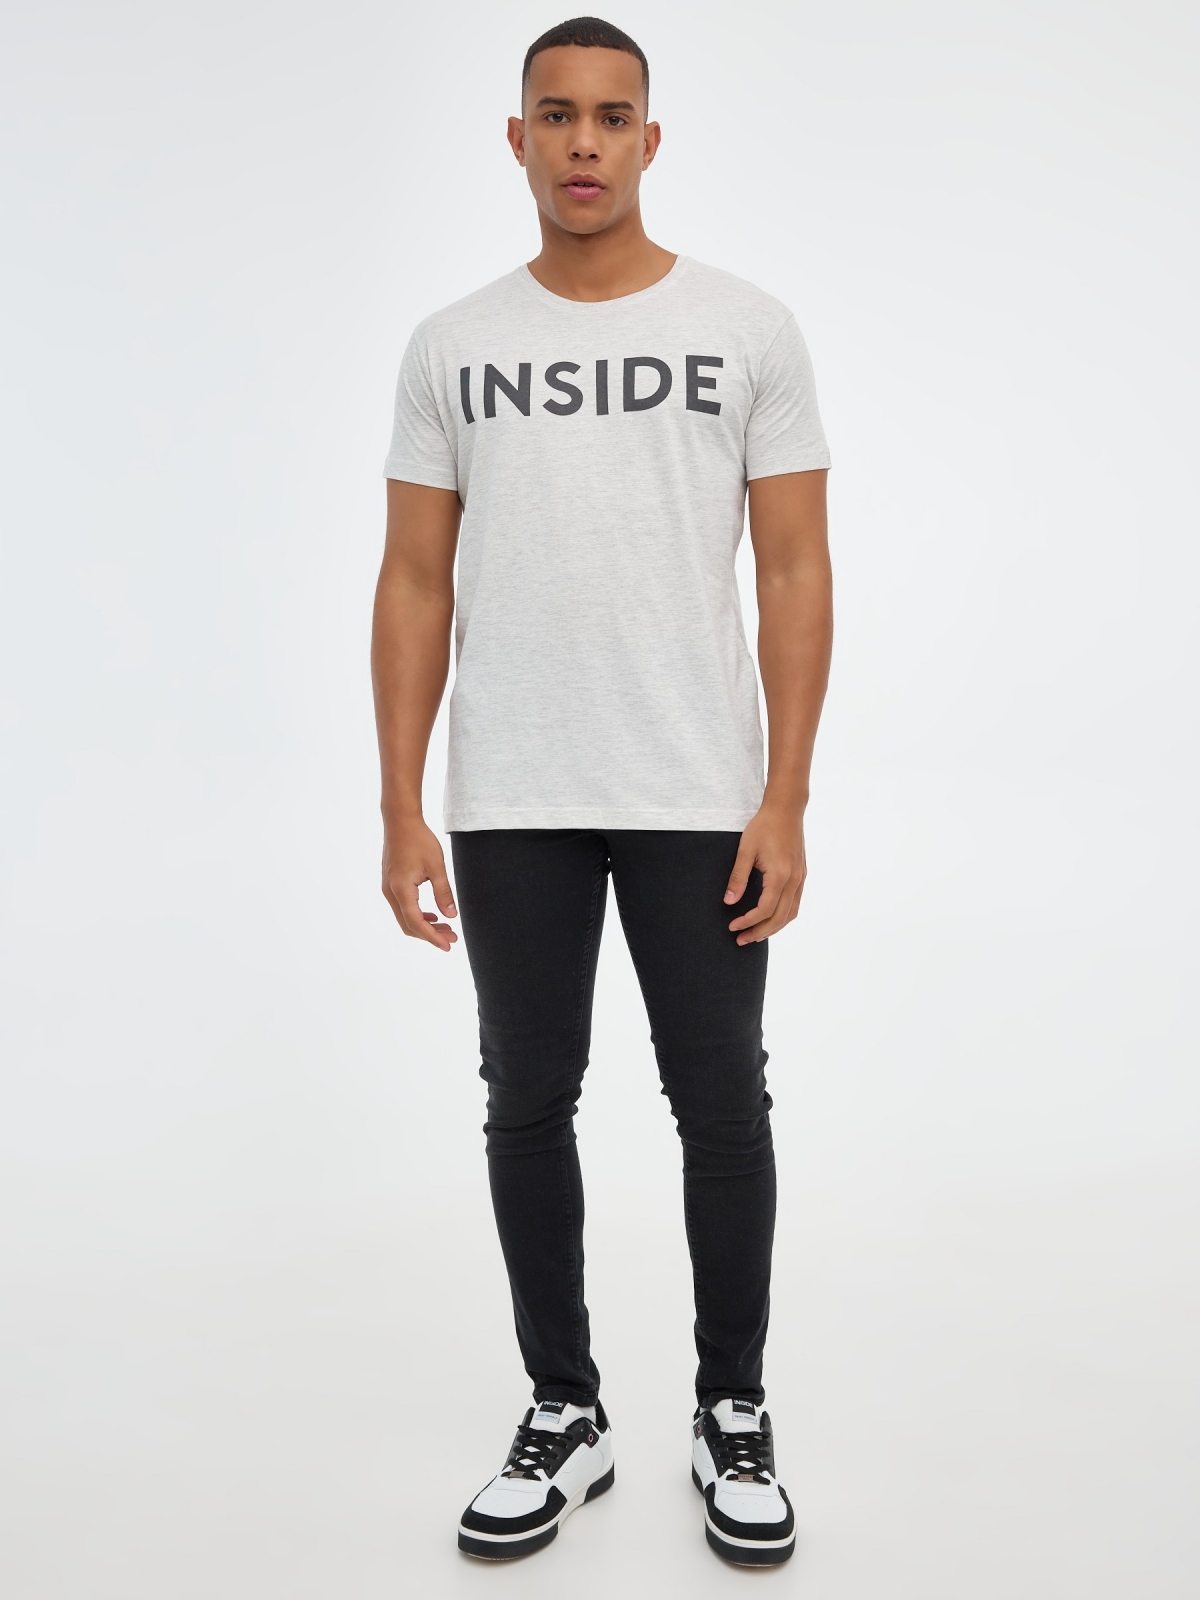 Camiseta básica "INSIDE" gris claro vista general frontal